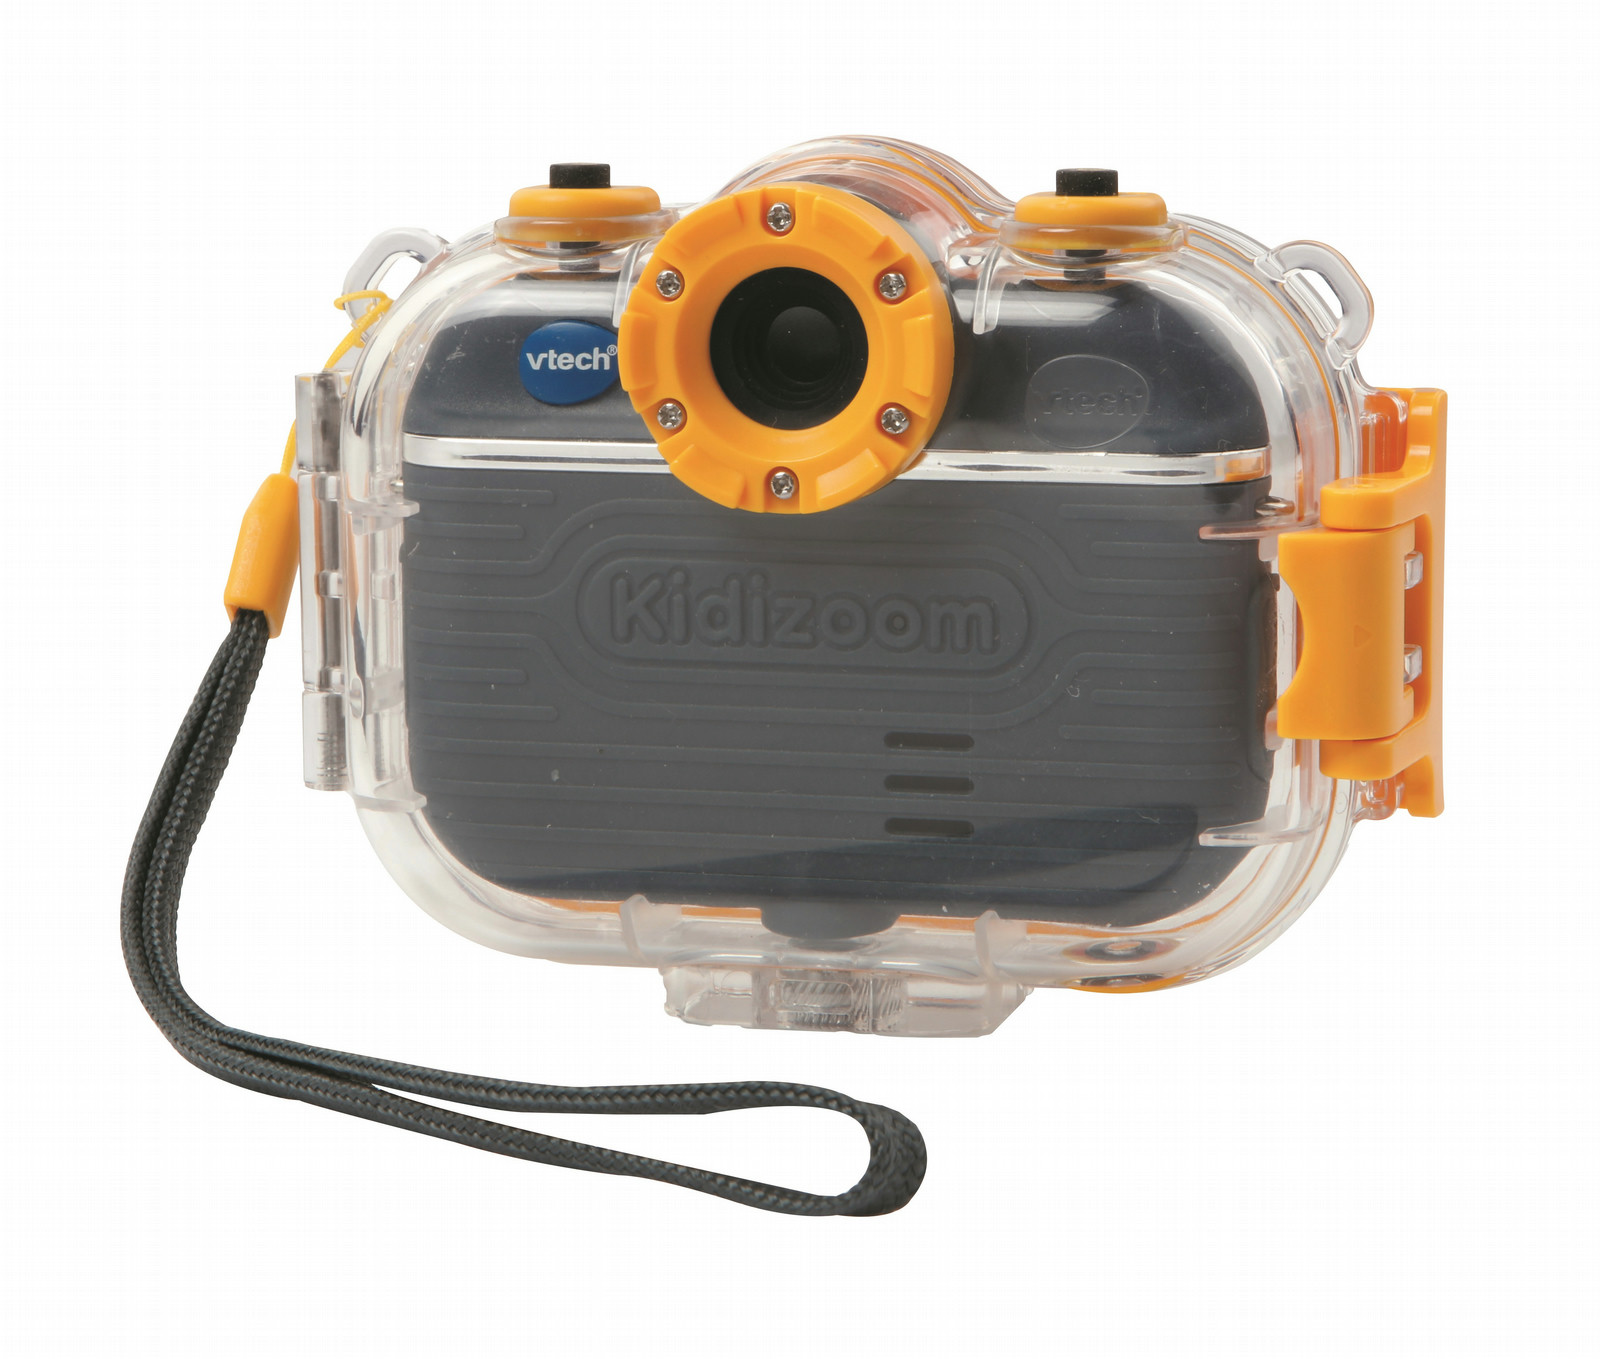 kidizoom action camera 180